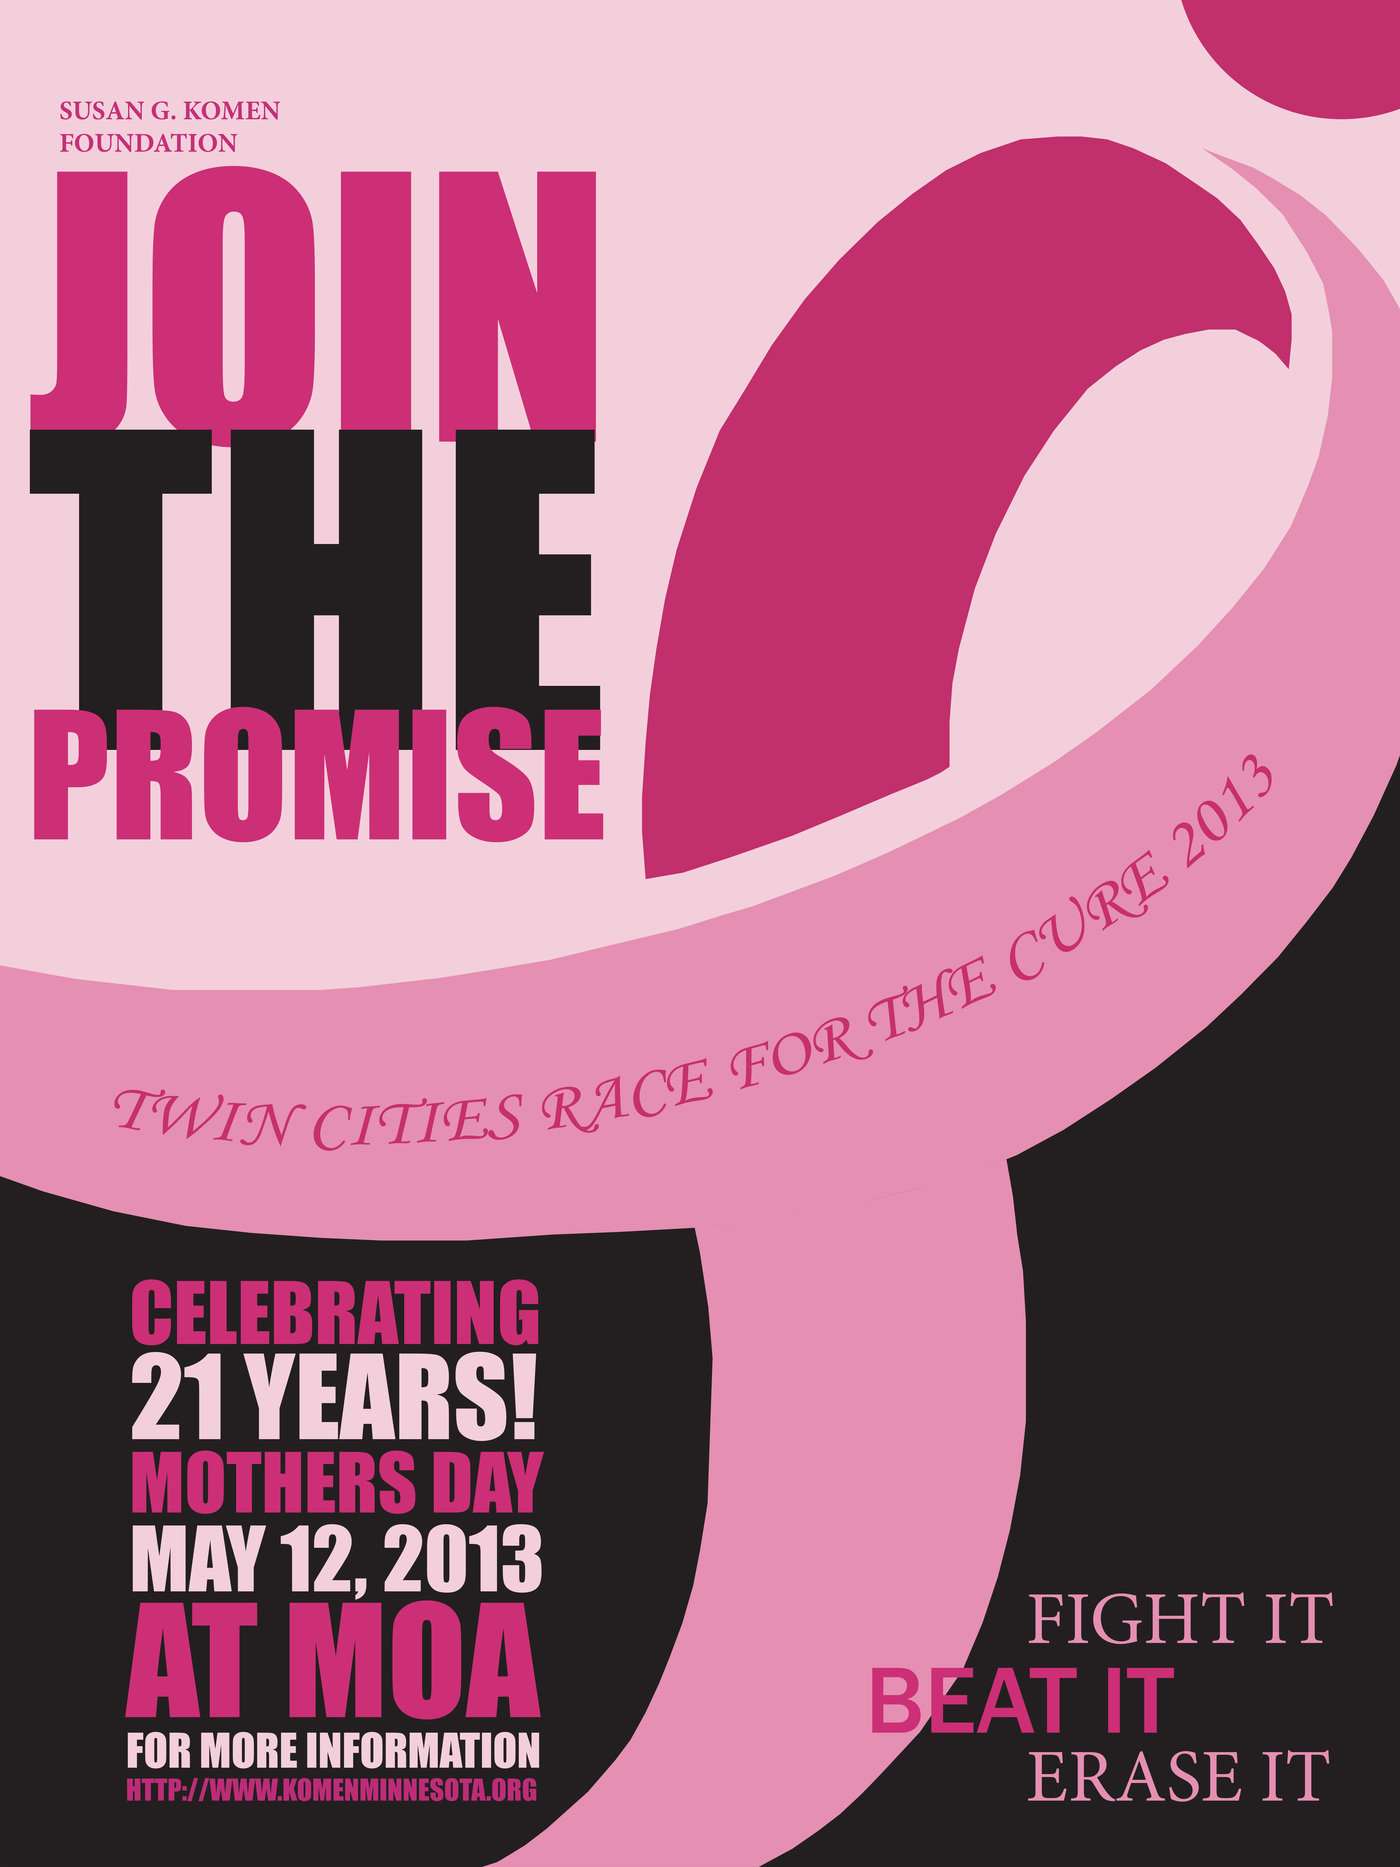 Breast Cancer Awareness Posters by Samantha Gill at Coroflot.com